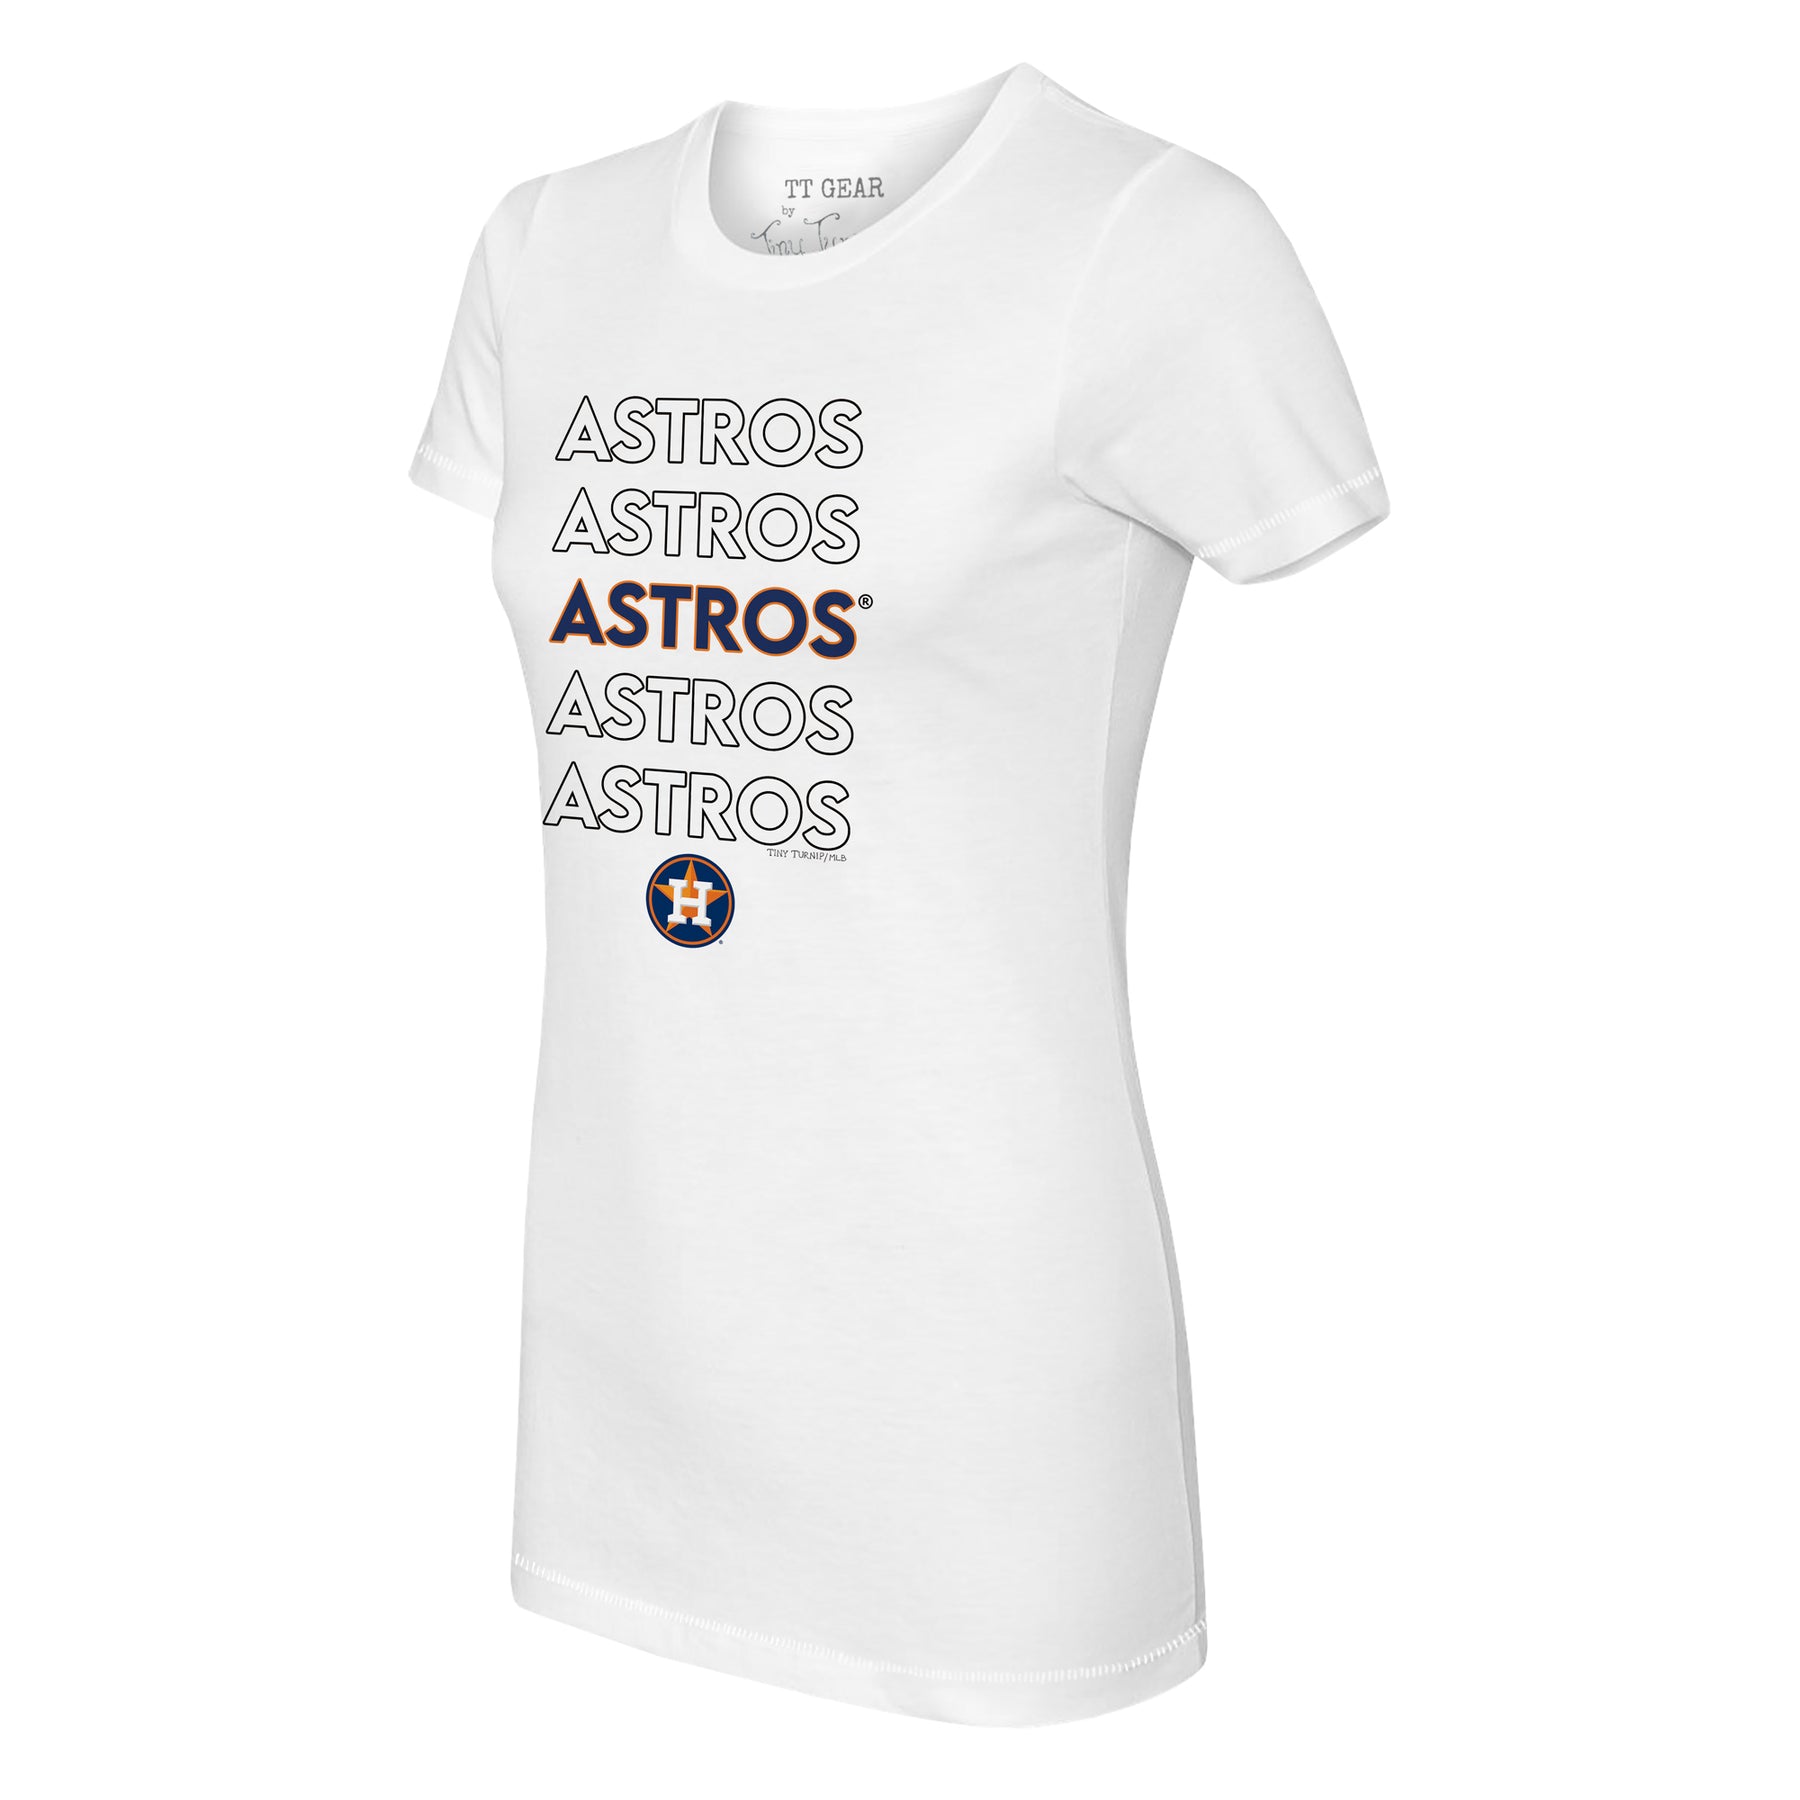 MLB Houston Astros Women's Short Sleeve White Graphic Tee